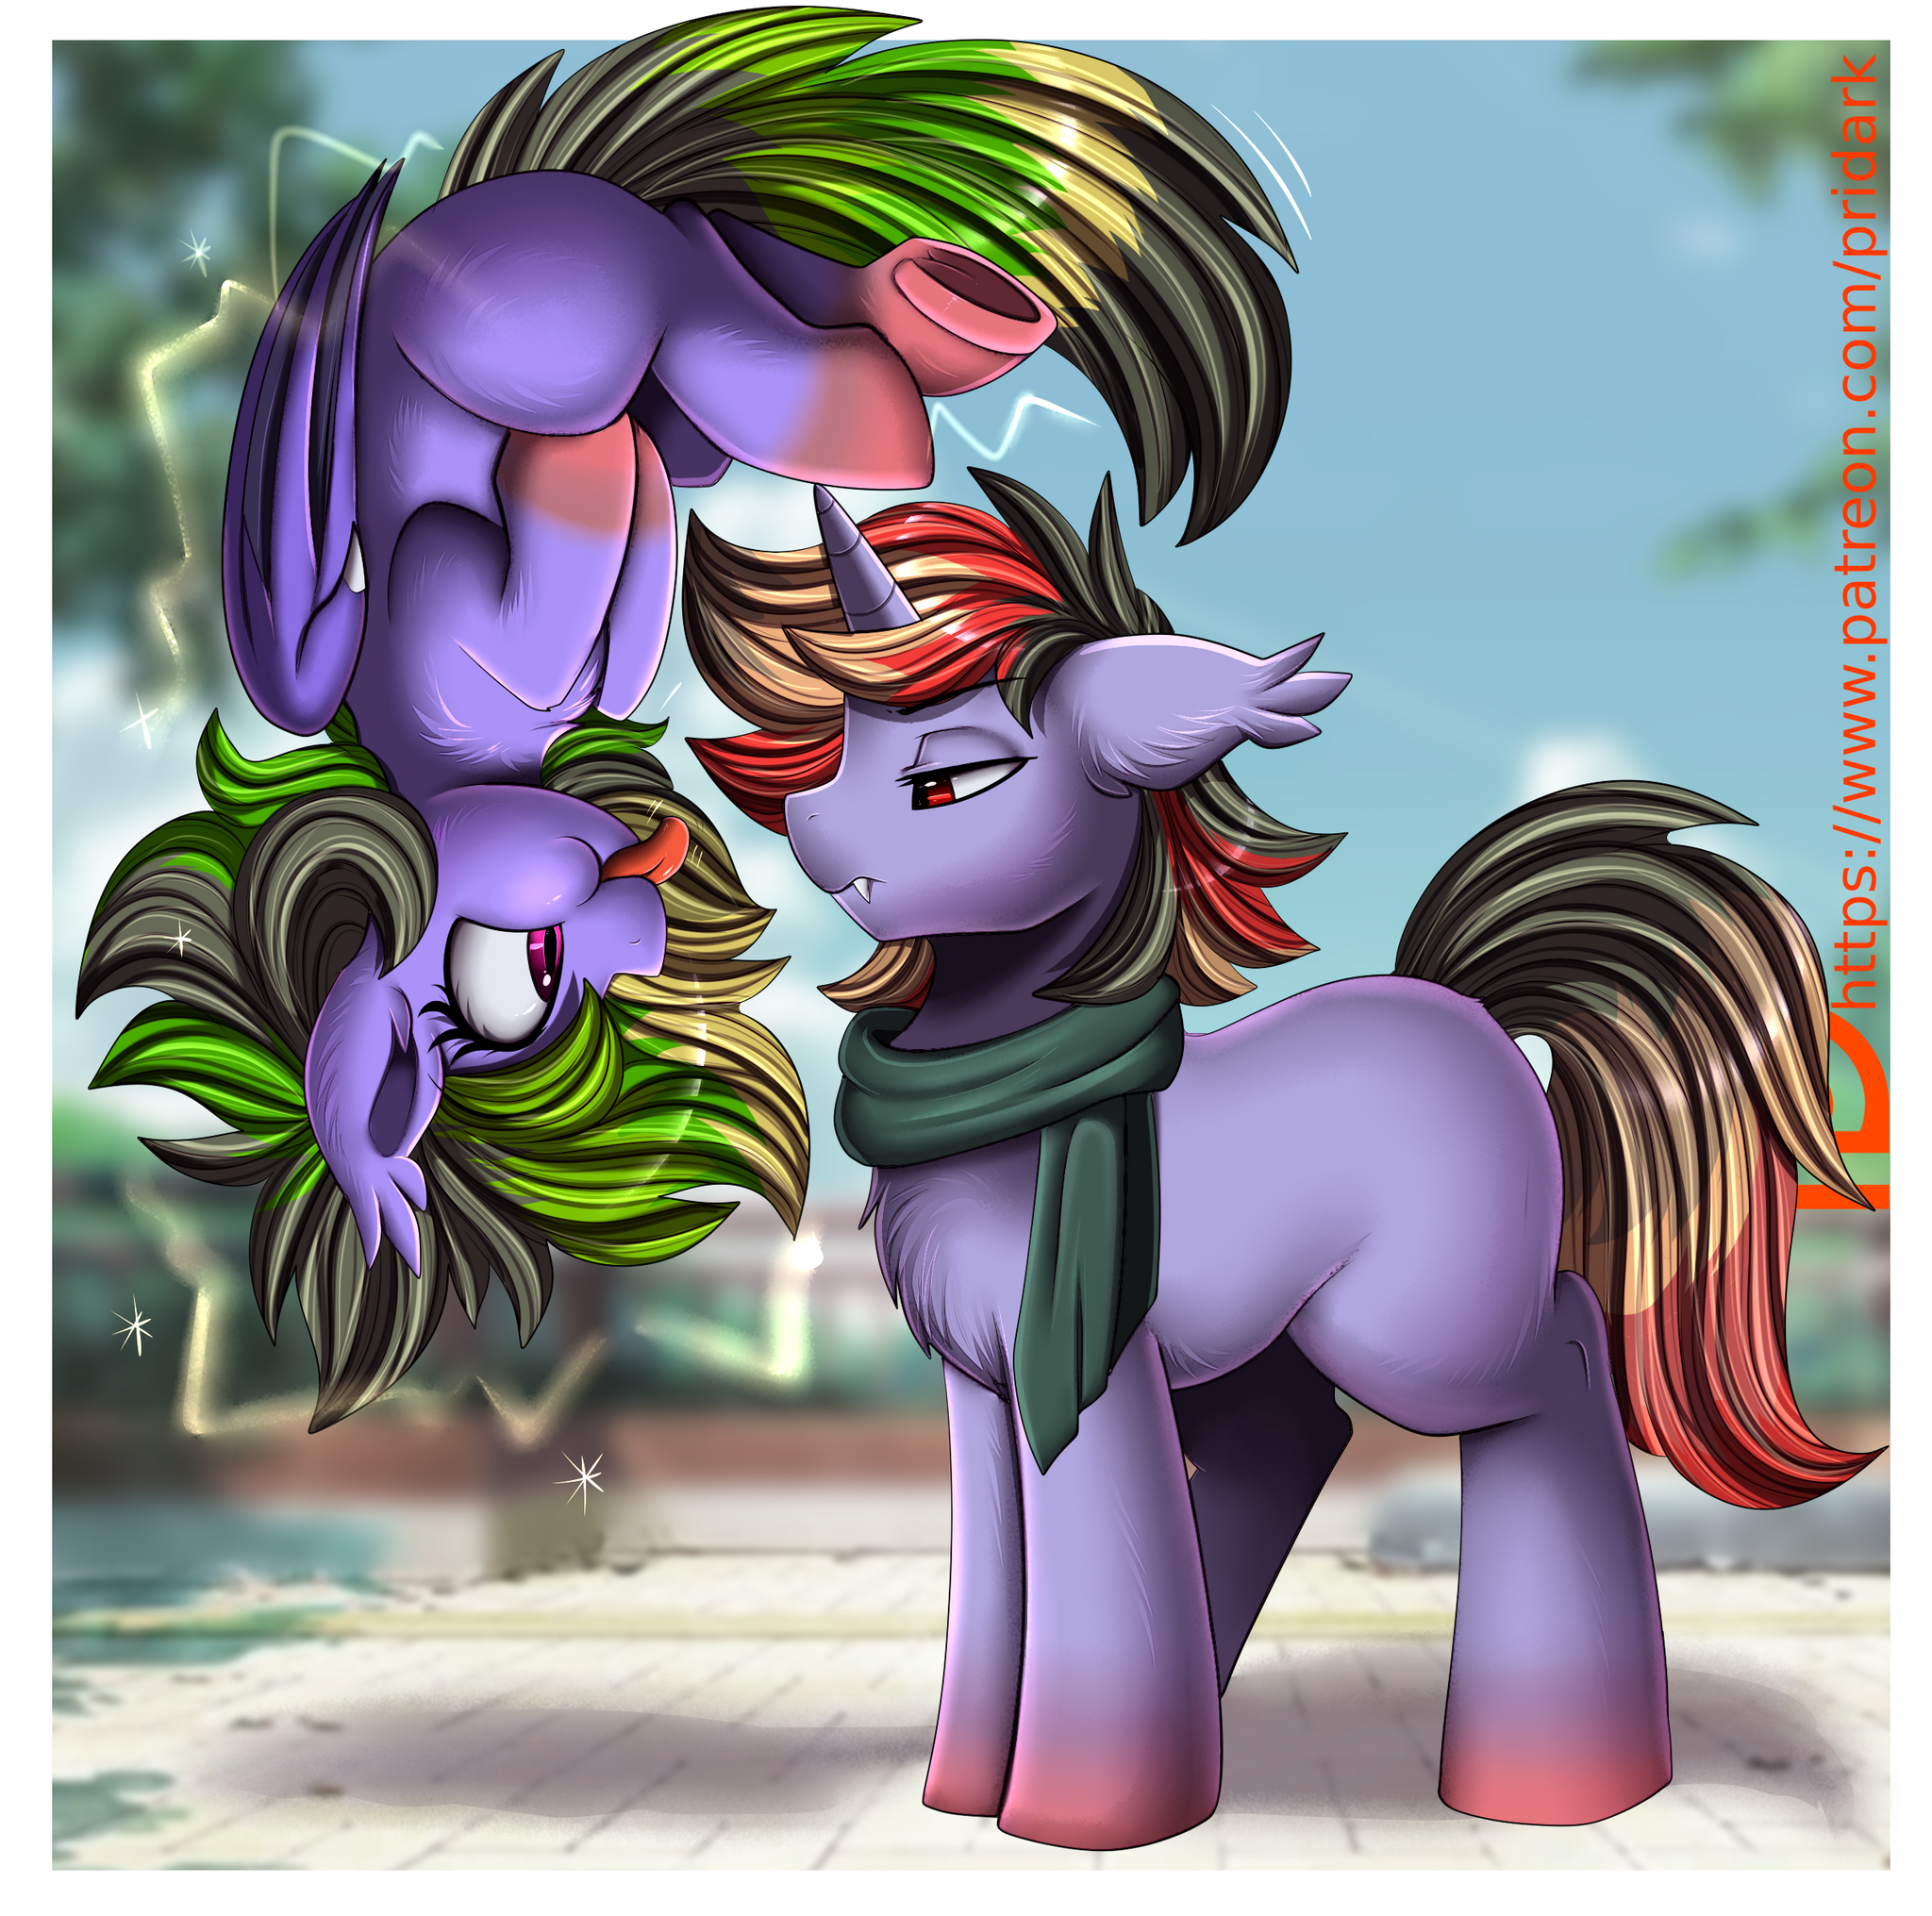 Unexpected meeting - My little pony, PonyArt, Original character, Pridark